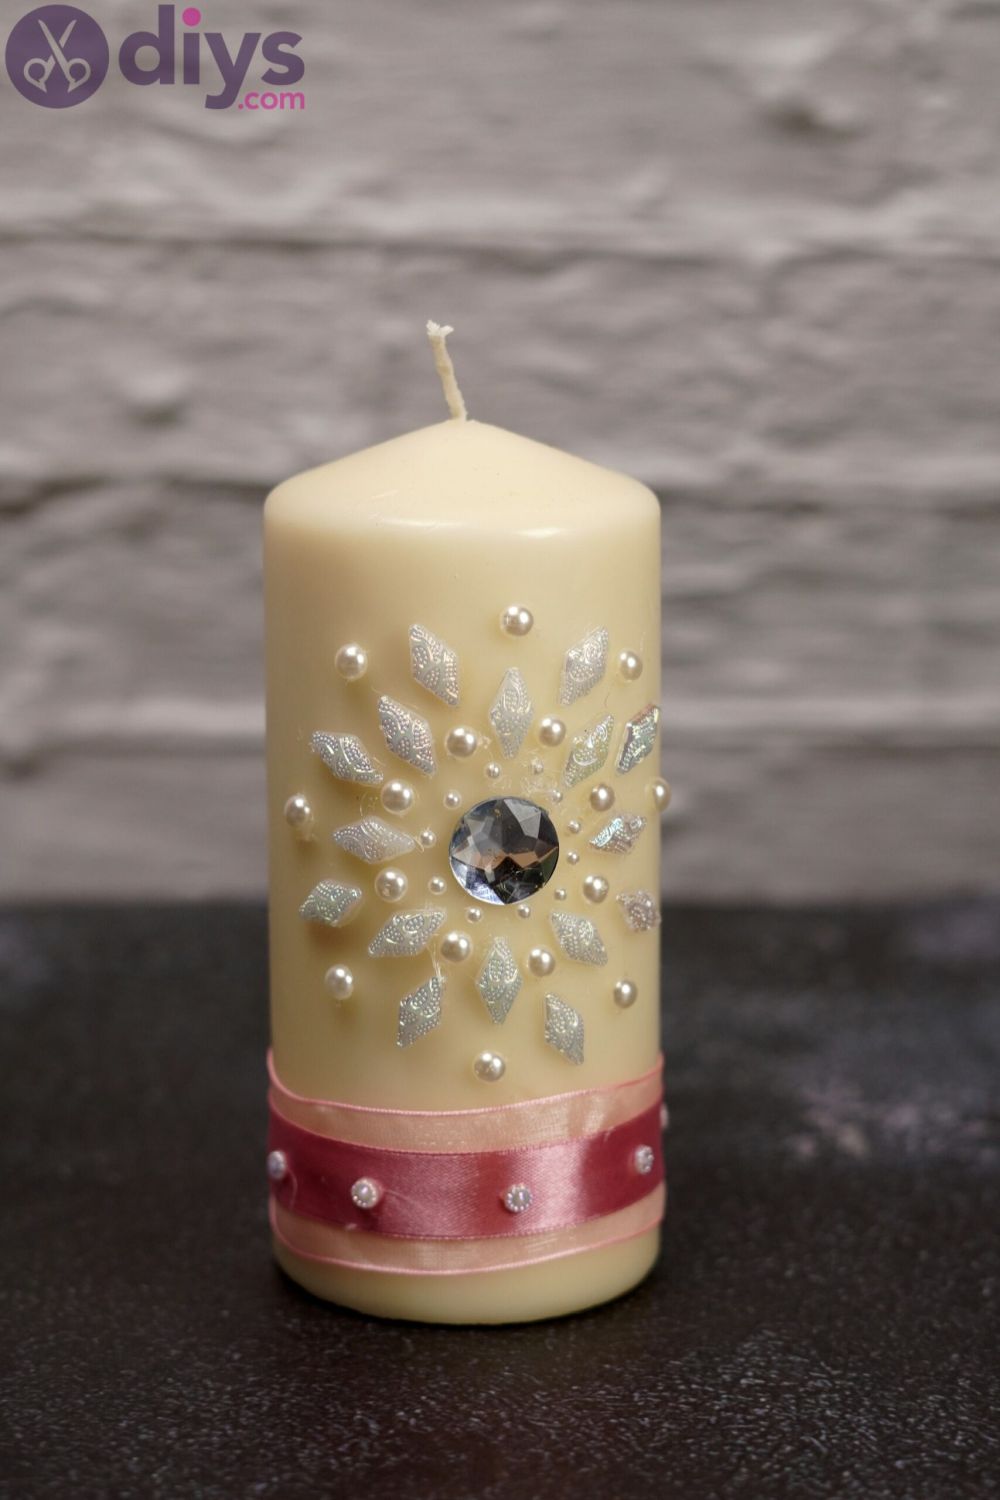 Diy sparkling candle